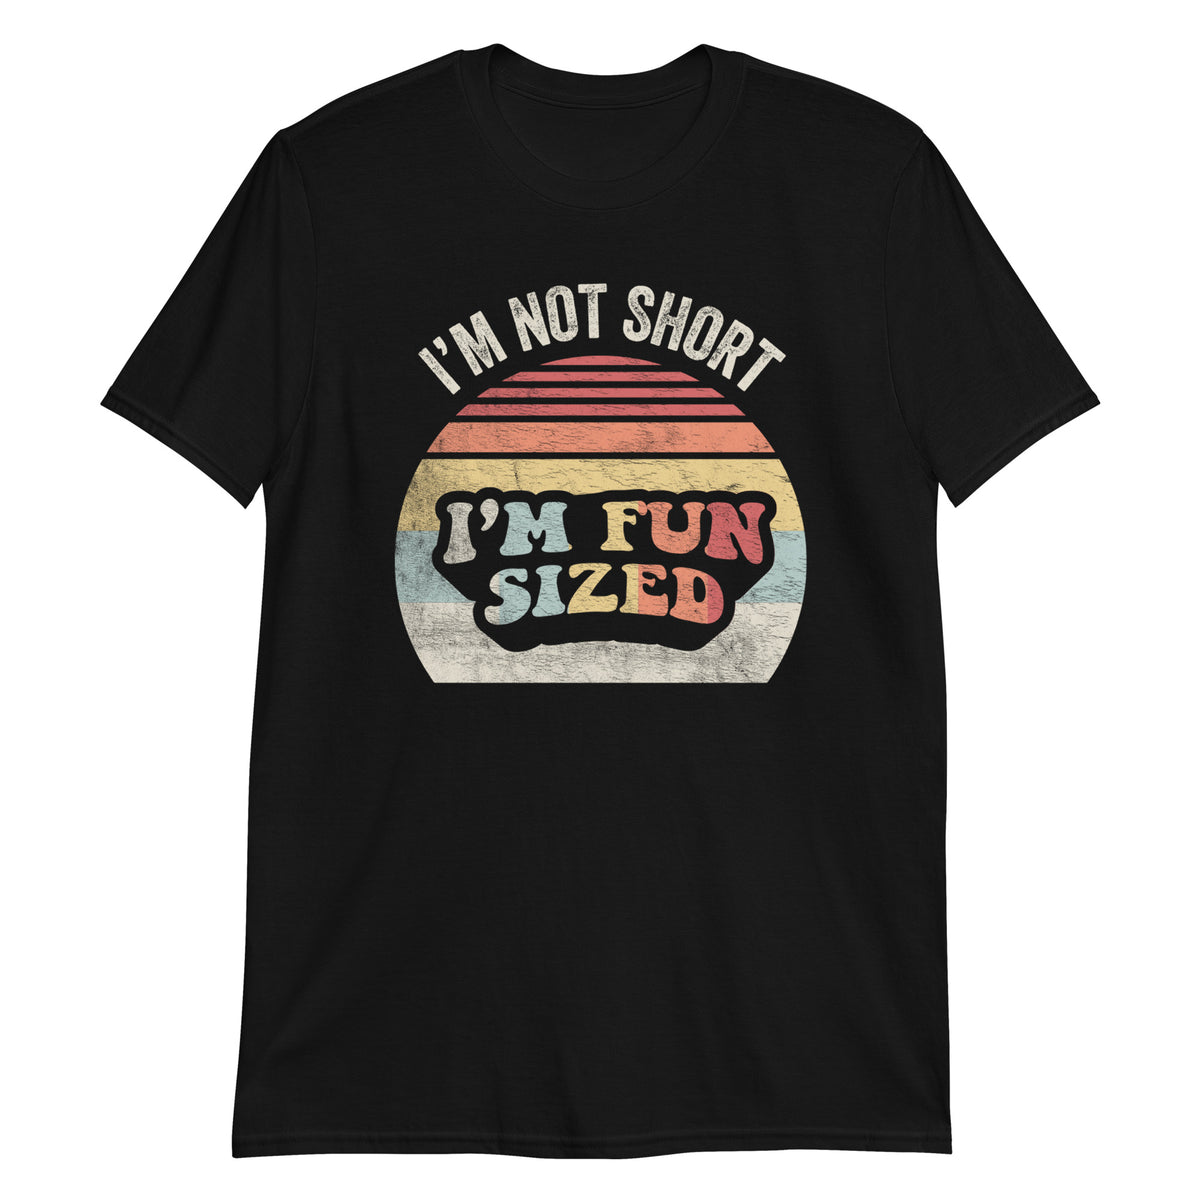 I'm Not Short I'm Fun Size T-Shirt